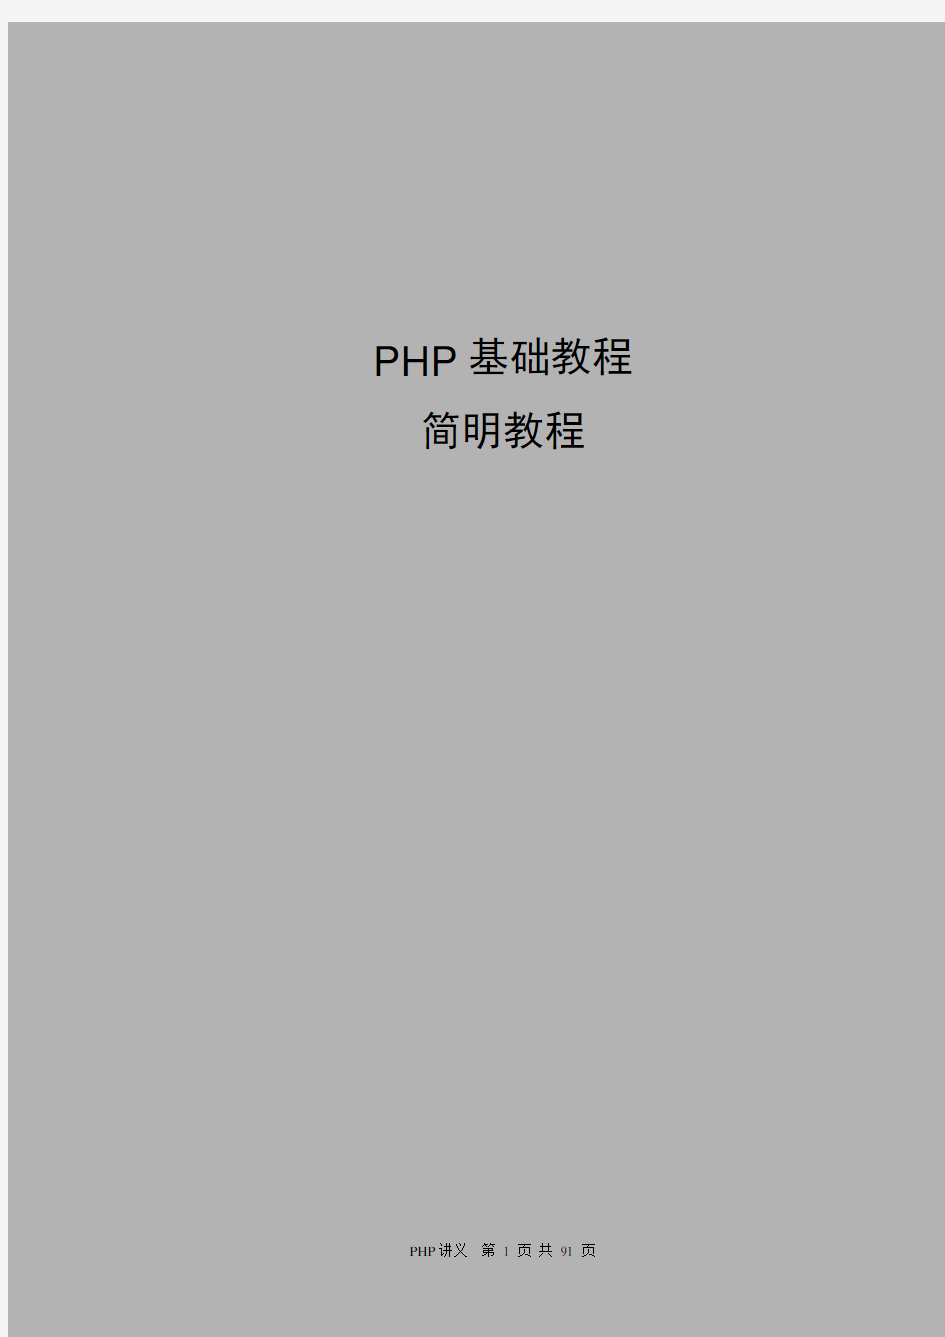 PHP基础教程-吐血大推荐